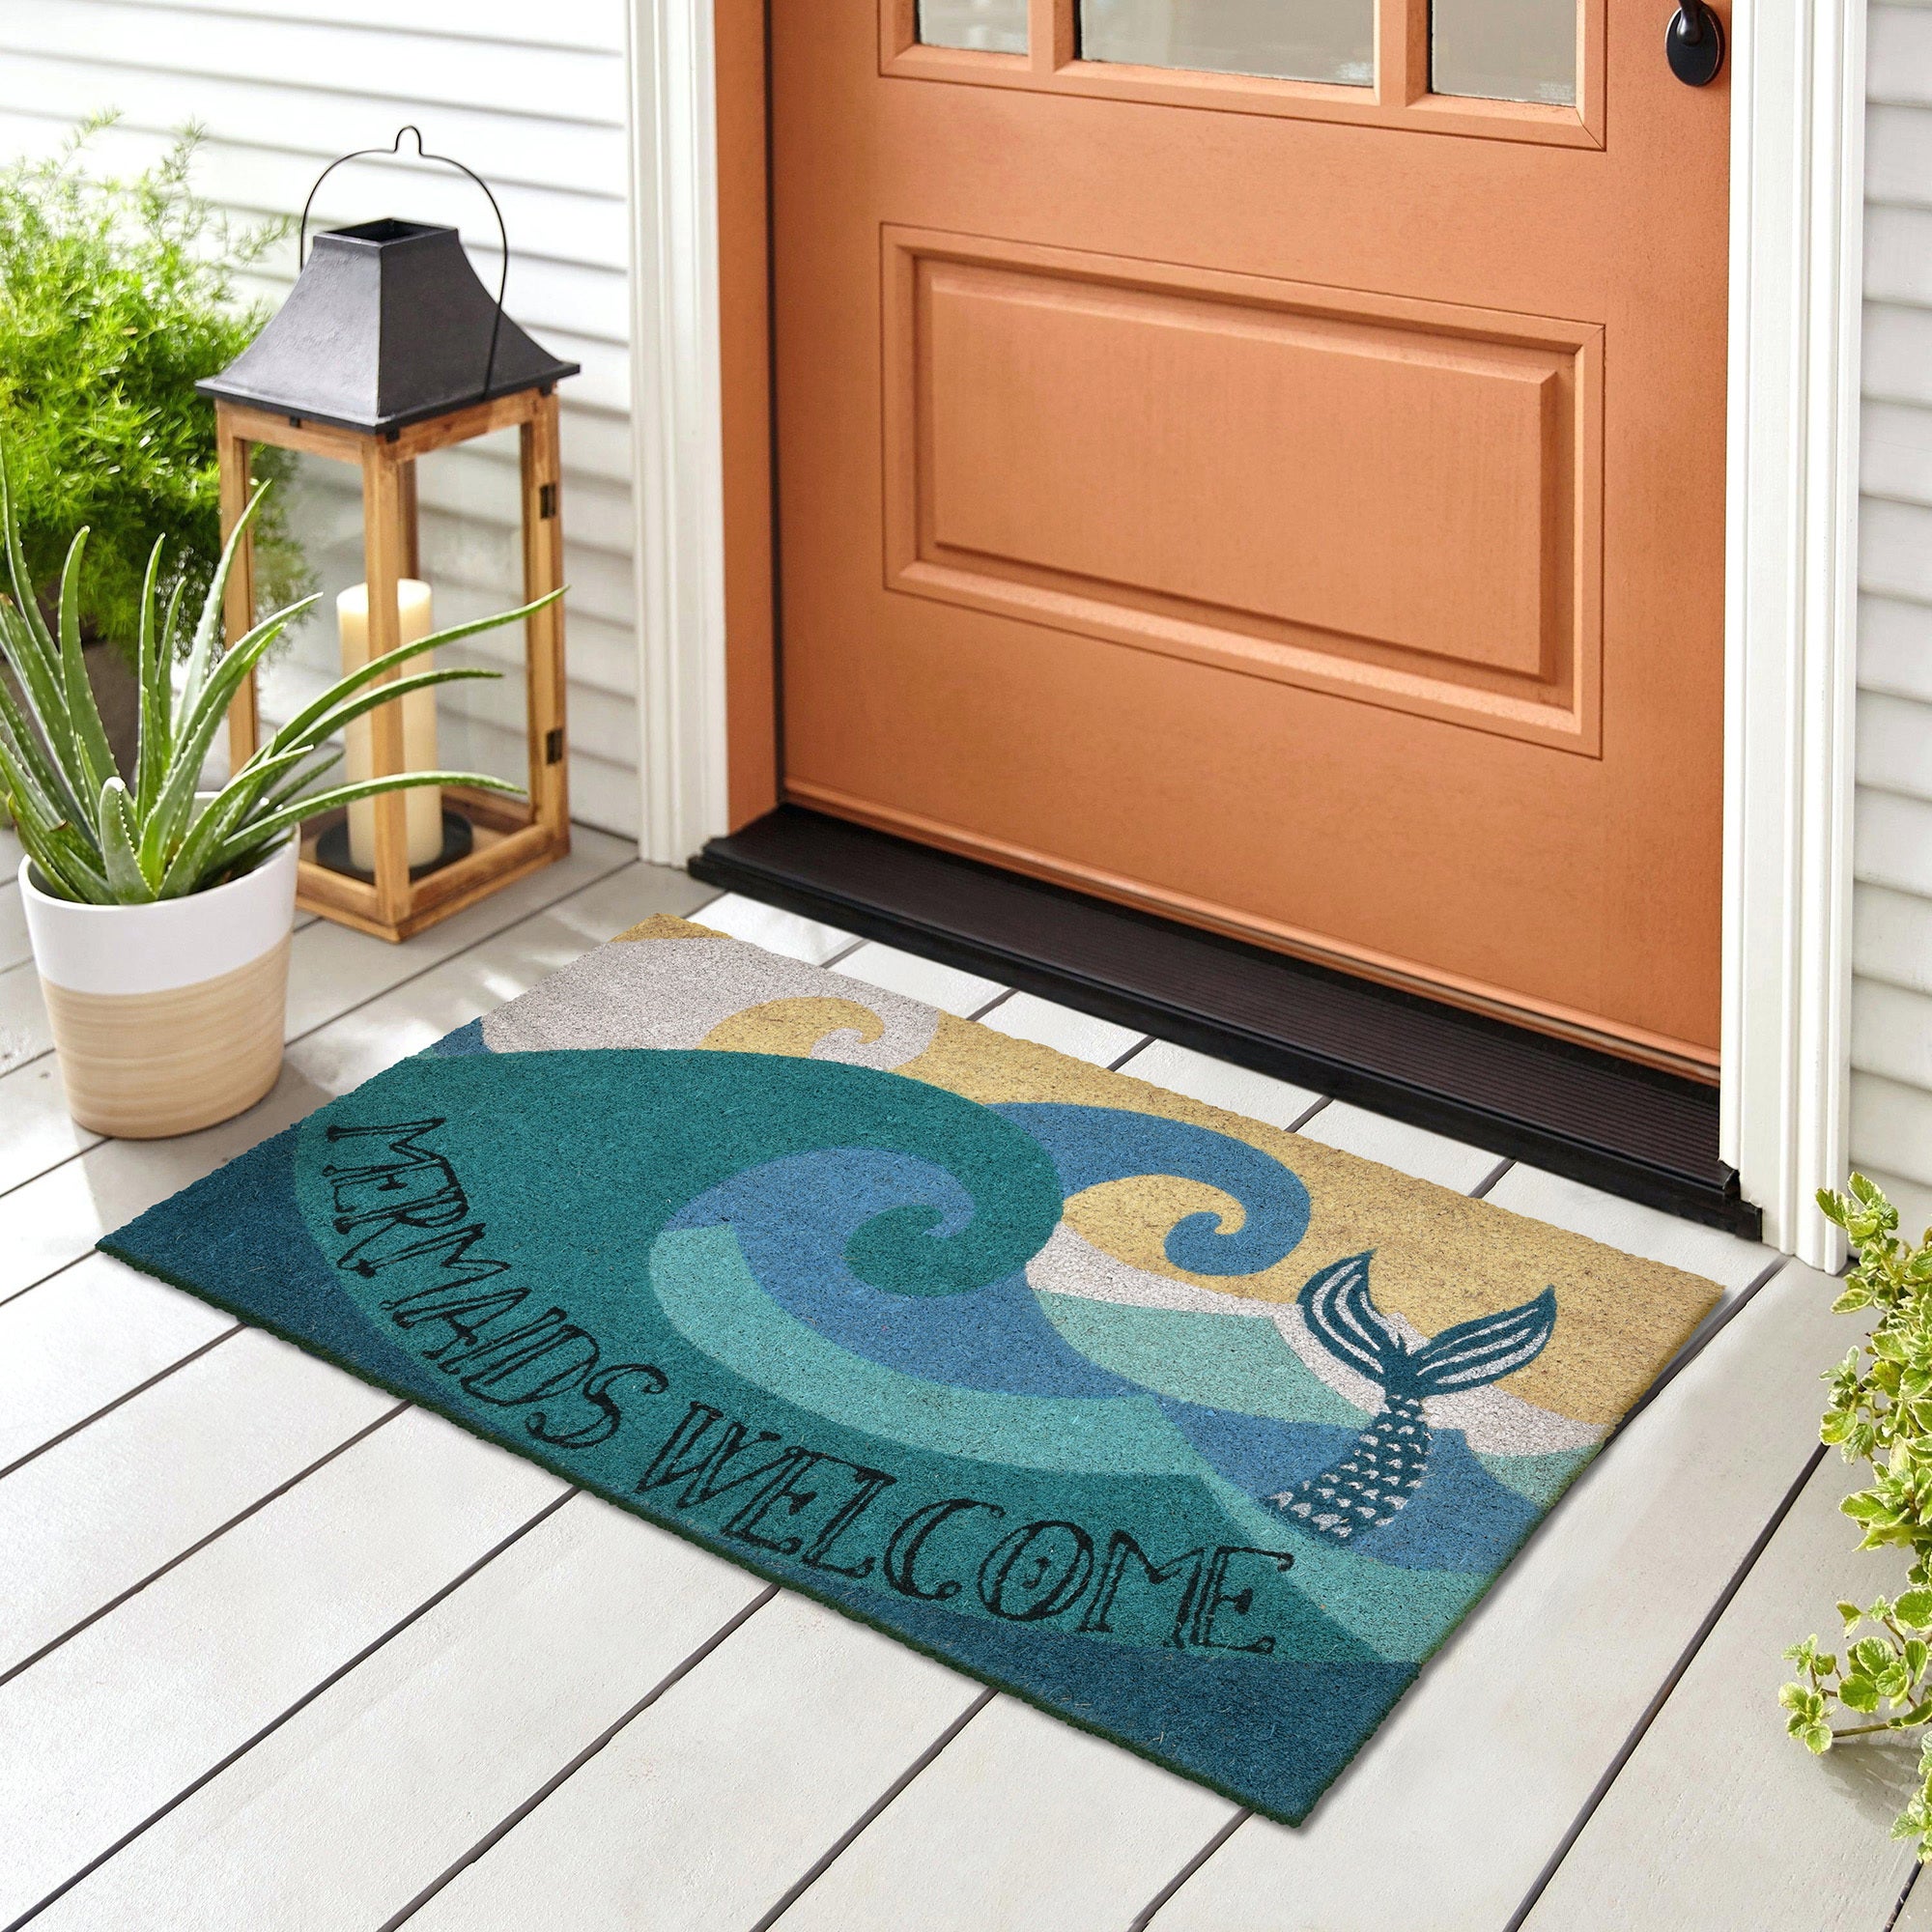 Foyers Long Lasting Color Liora Manne Natura Door Mat Novelty Designs Durable Natural Coir & Vinyl Back Porches Mermaids Welcome 2' x 3' Patios & Decks